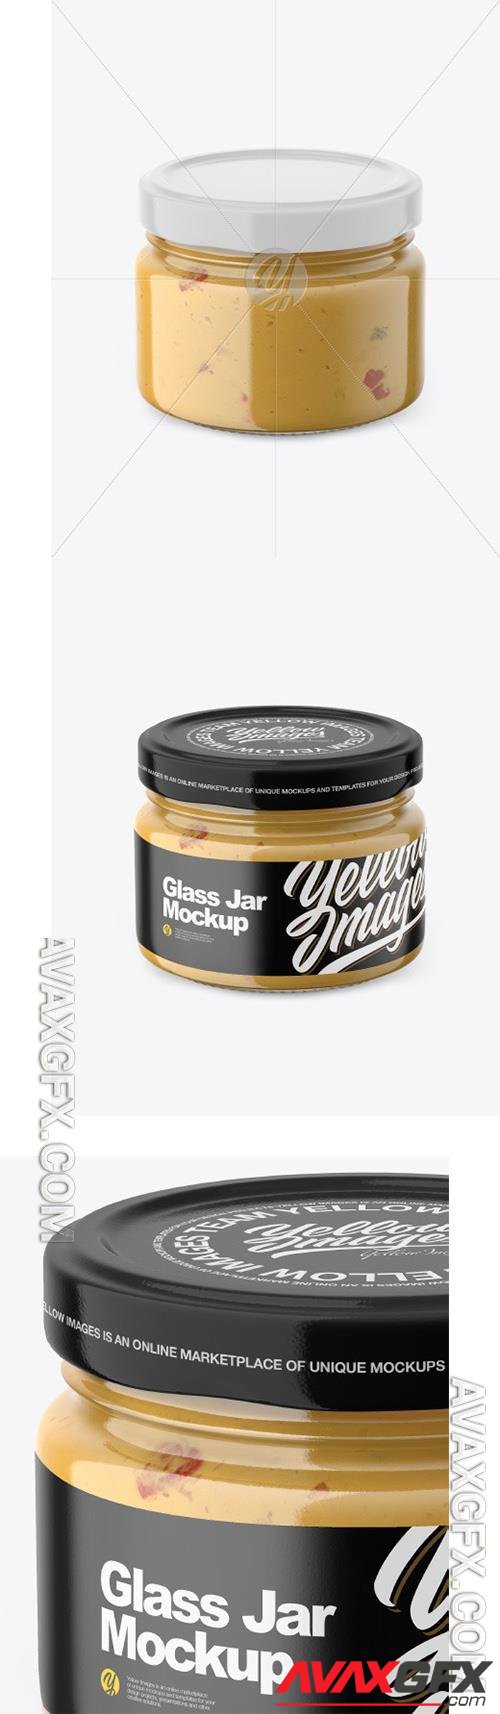 Glass Jar with Sauce Mockup 86285 TIF